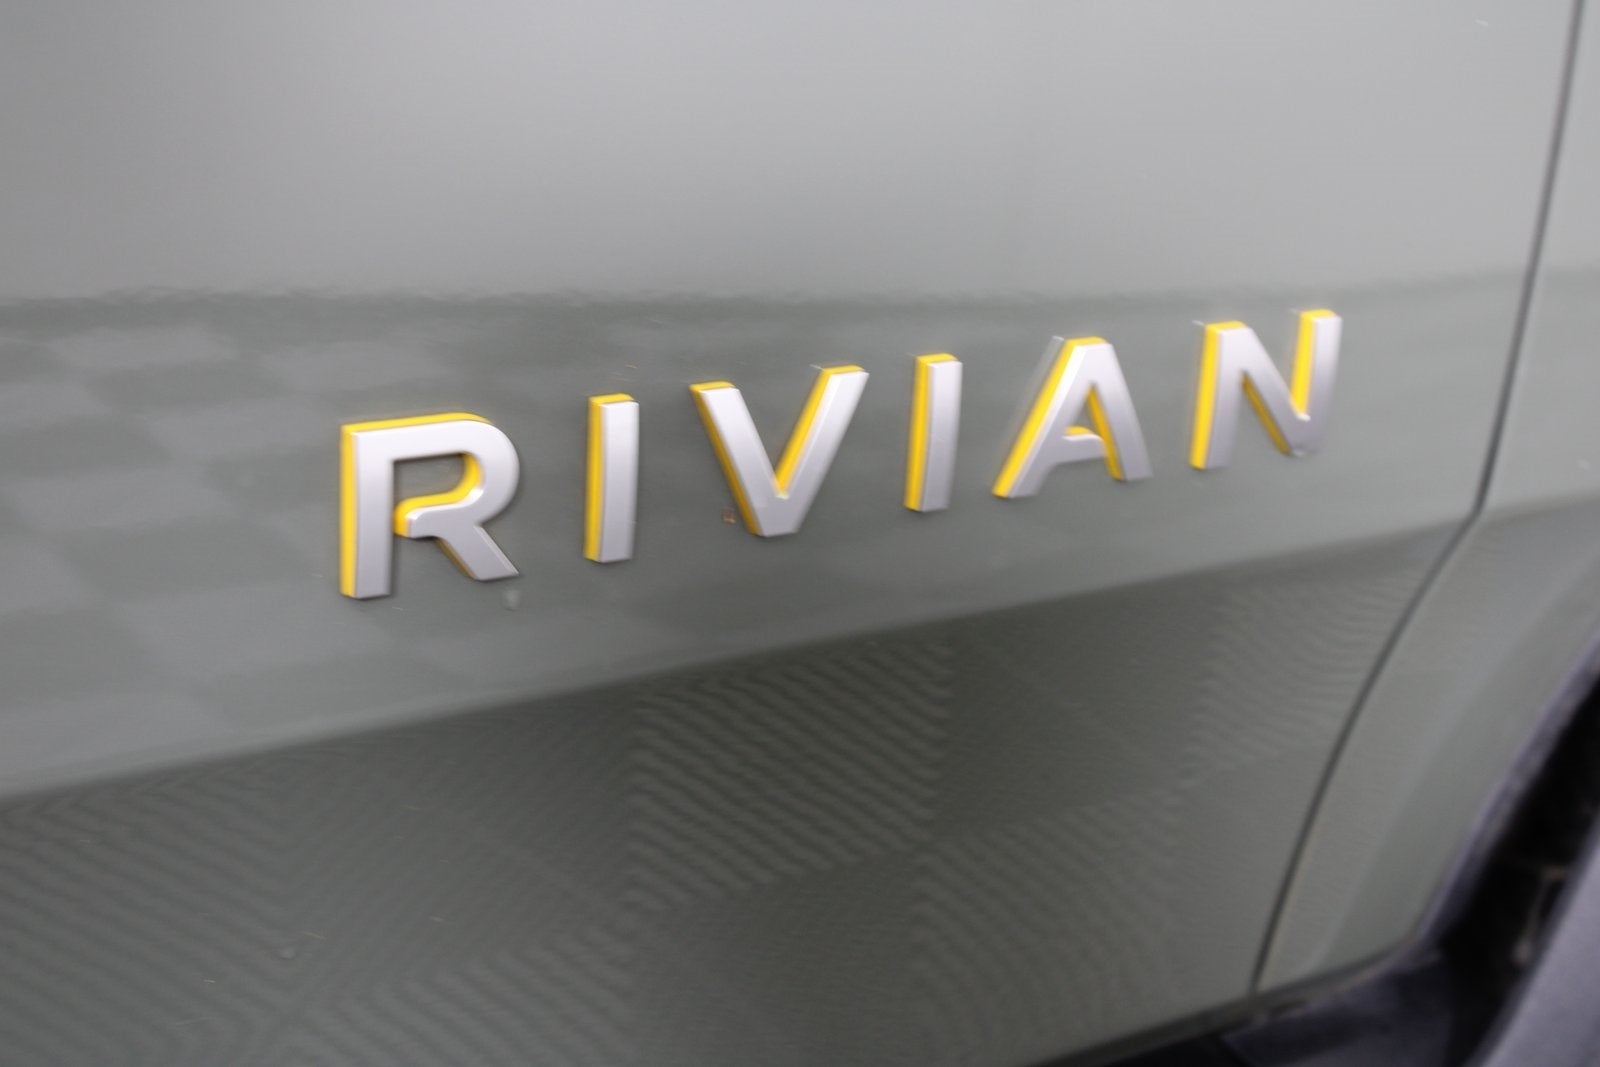 2022 Rivian R1T Launch Edition